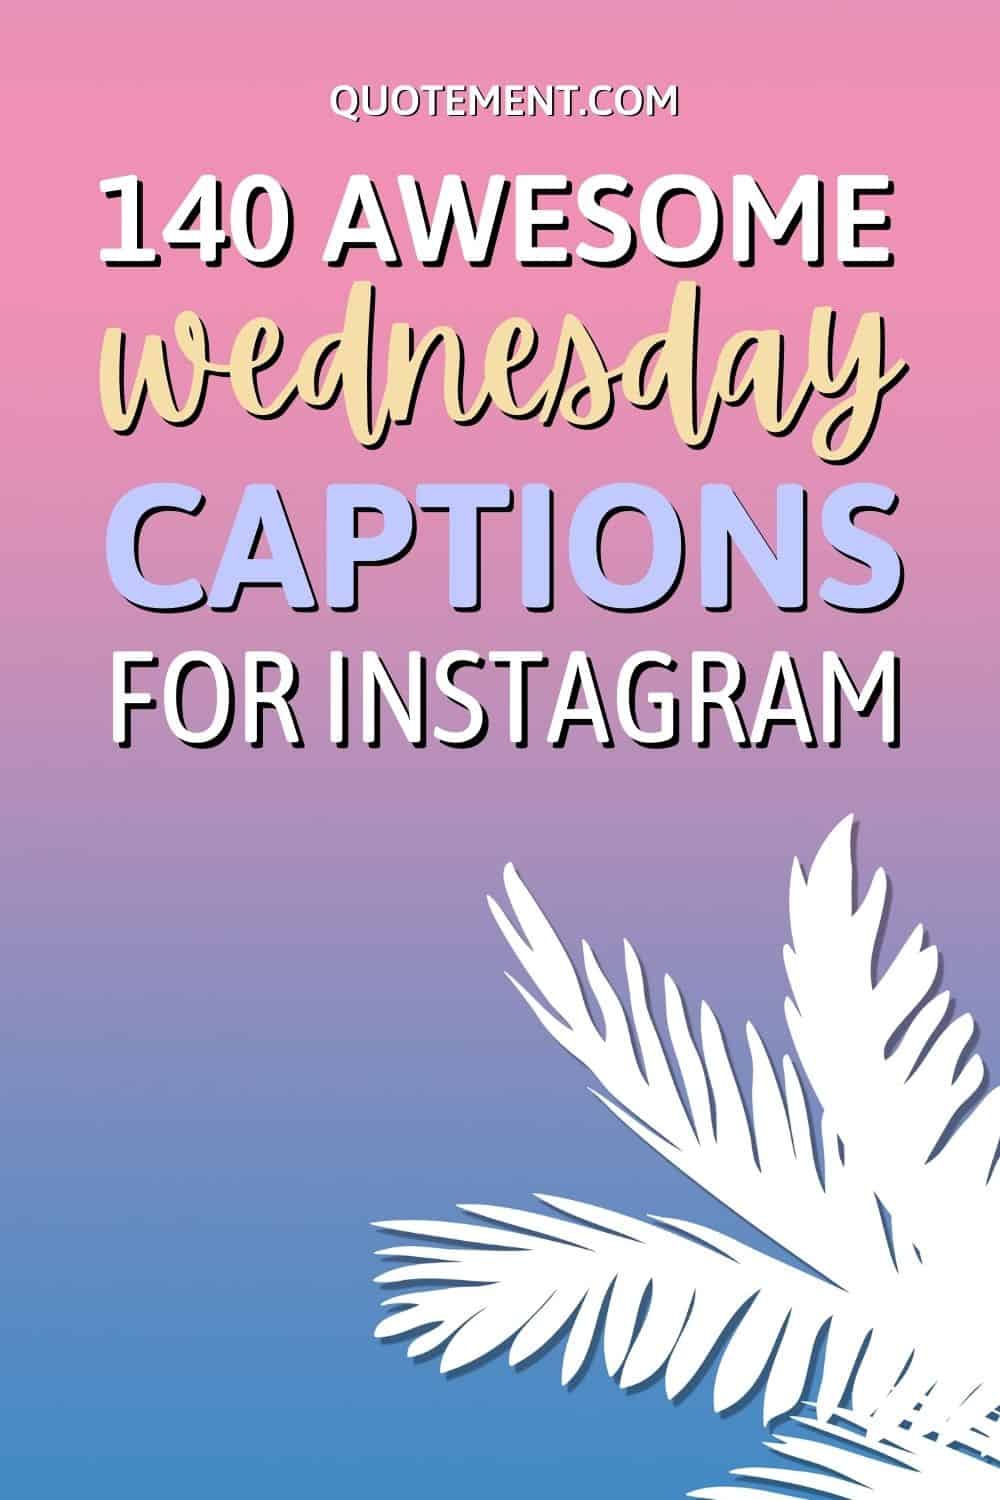 140 Amazing Wednesday Captions To Make Your Instagram Pop